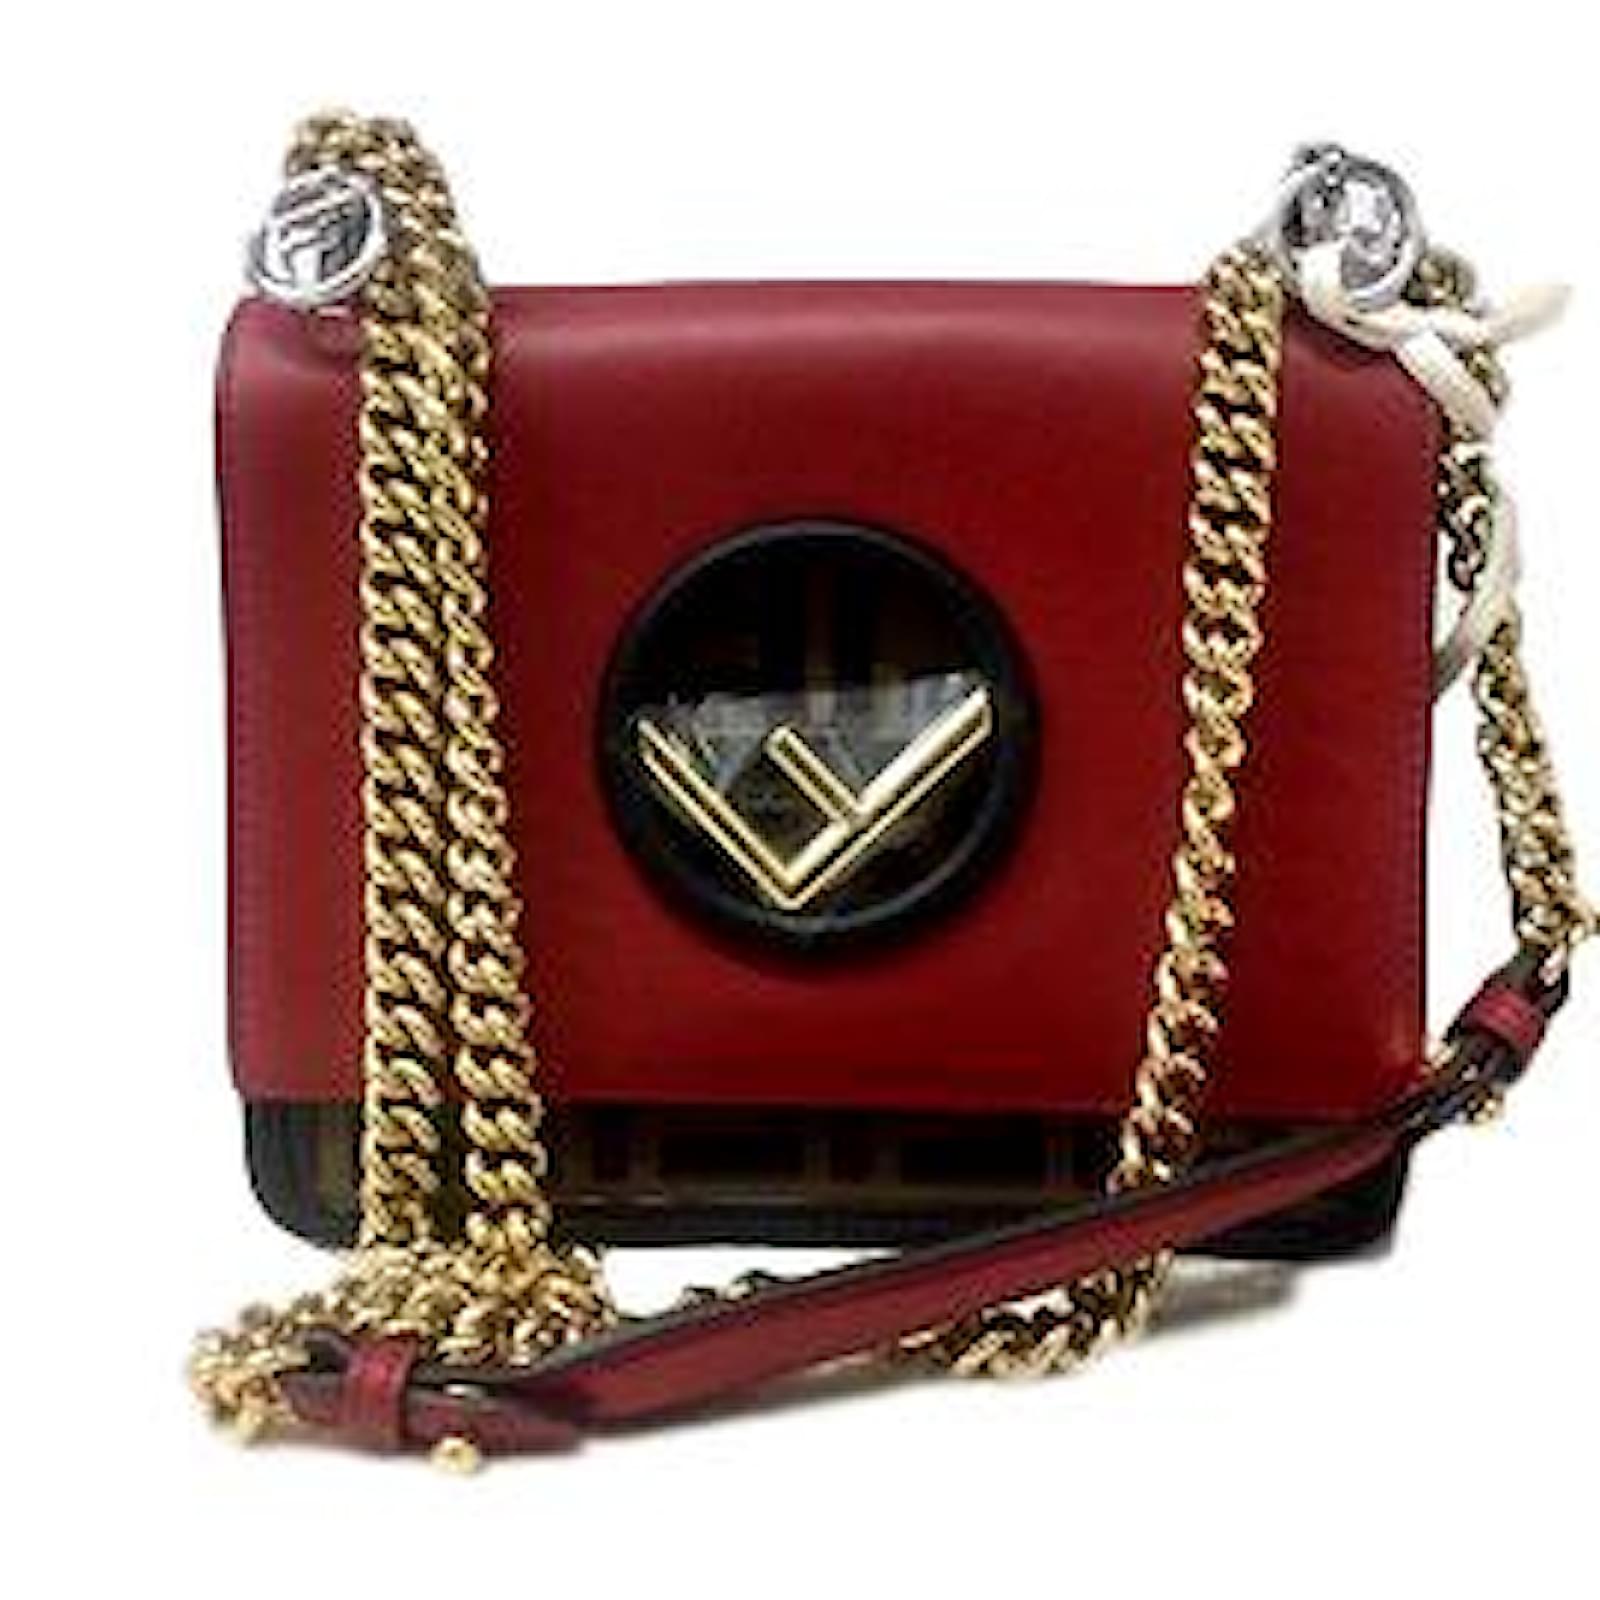 fendi handbags new collection